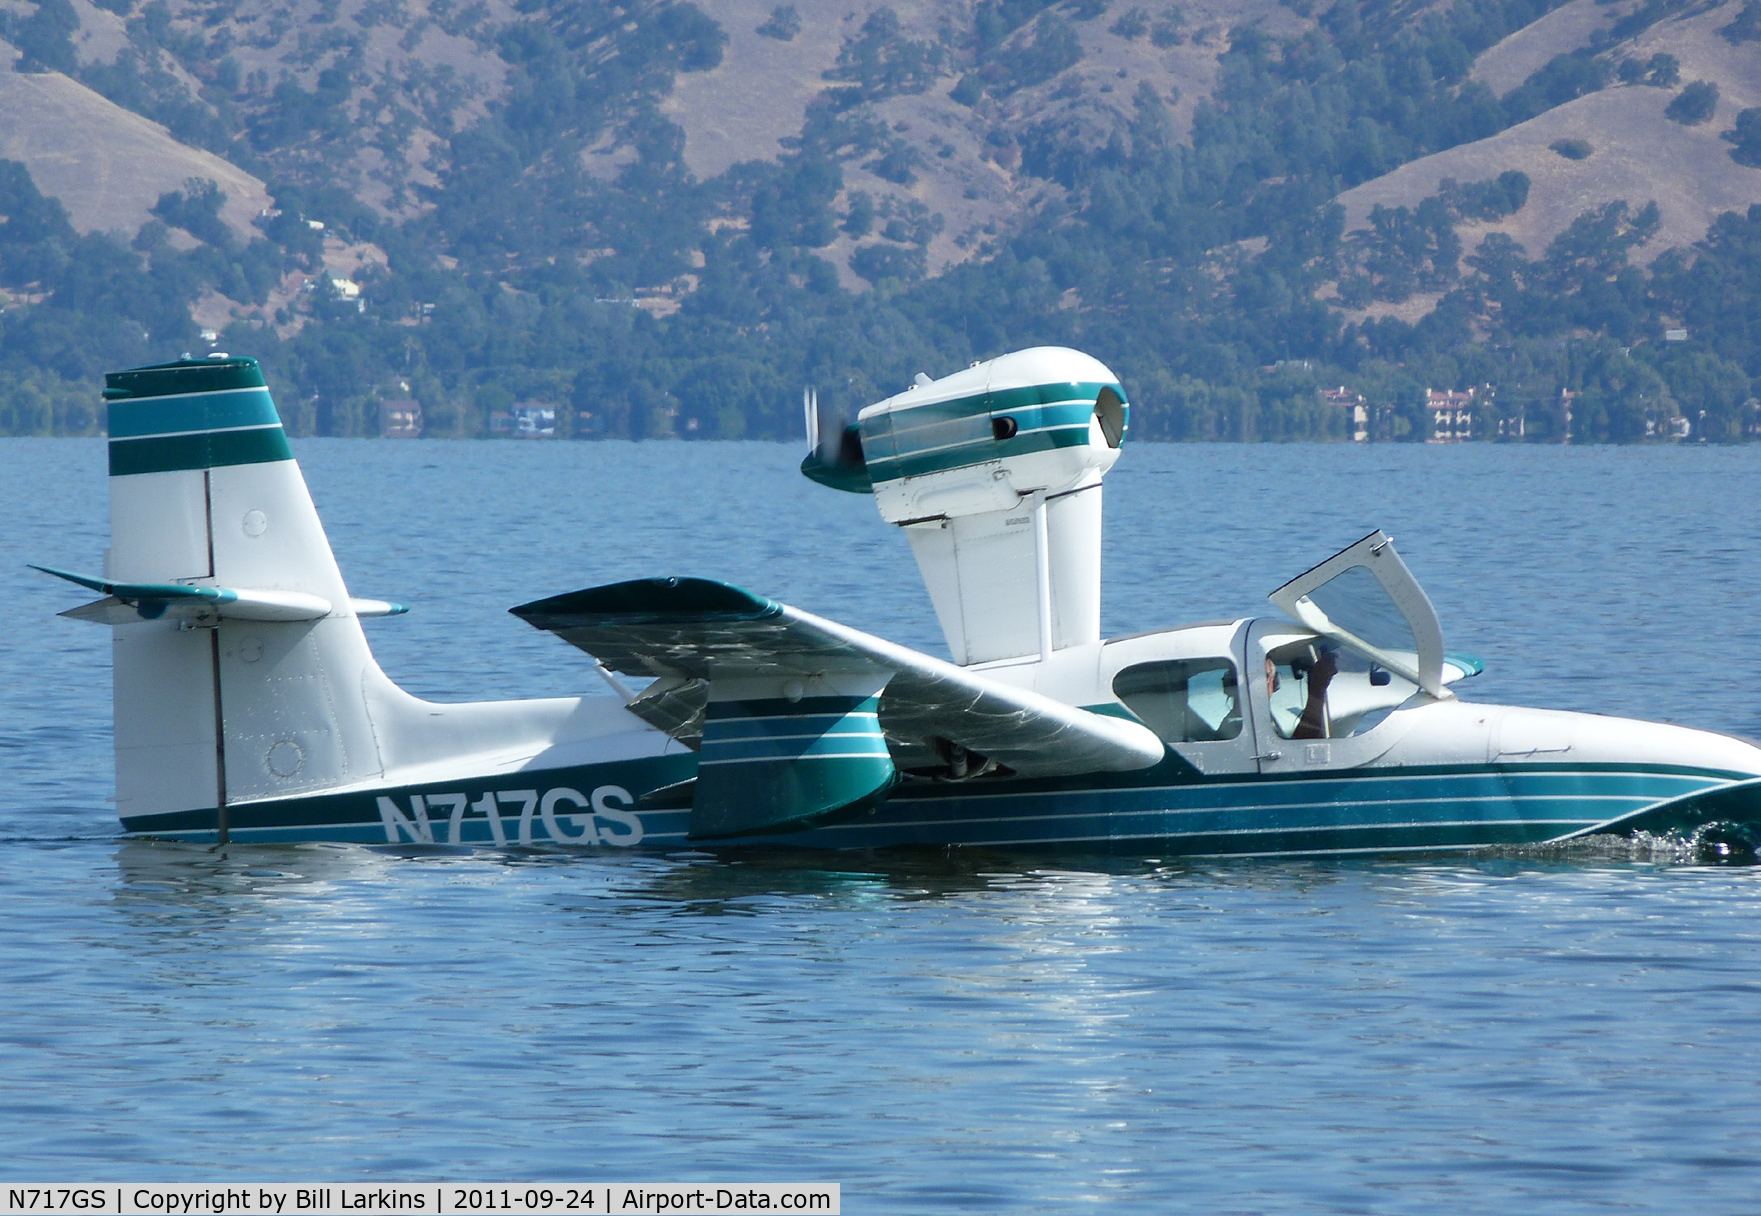 N717GS, 1976 Consolidated Aeronautics Inc. LAKE LA-4-200 C/N 745, Clear Lake, CA